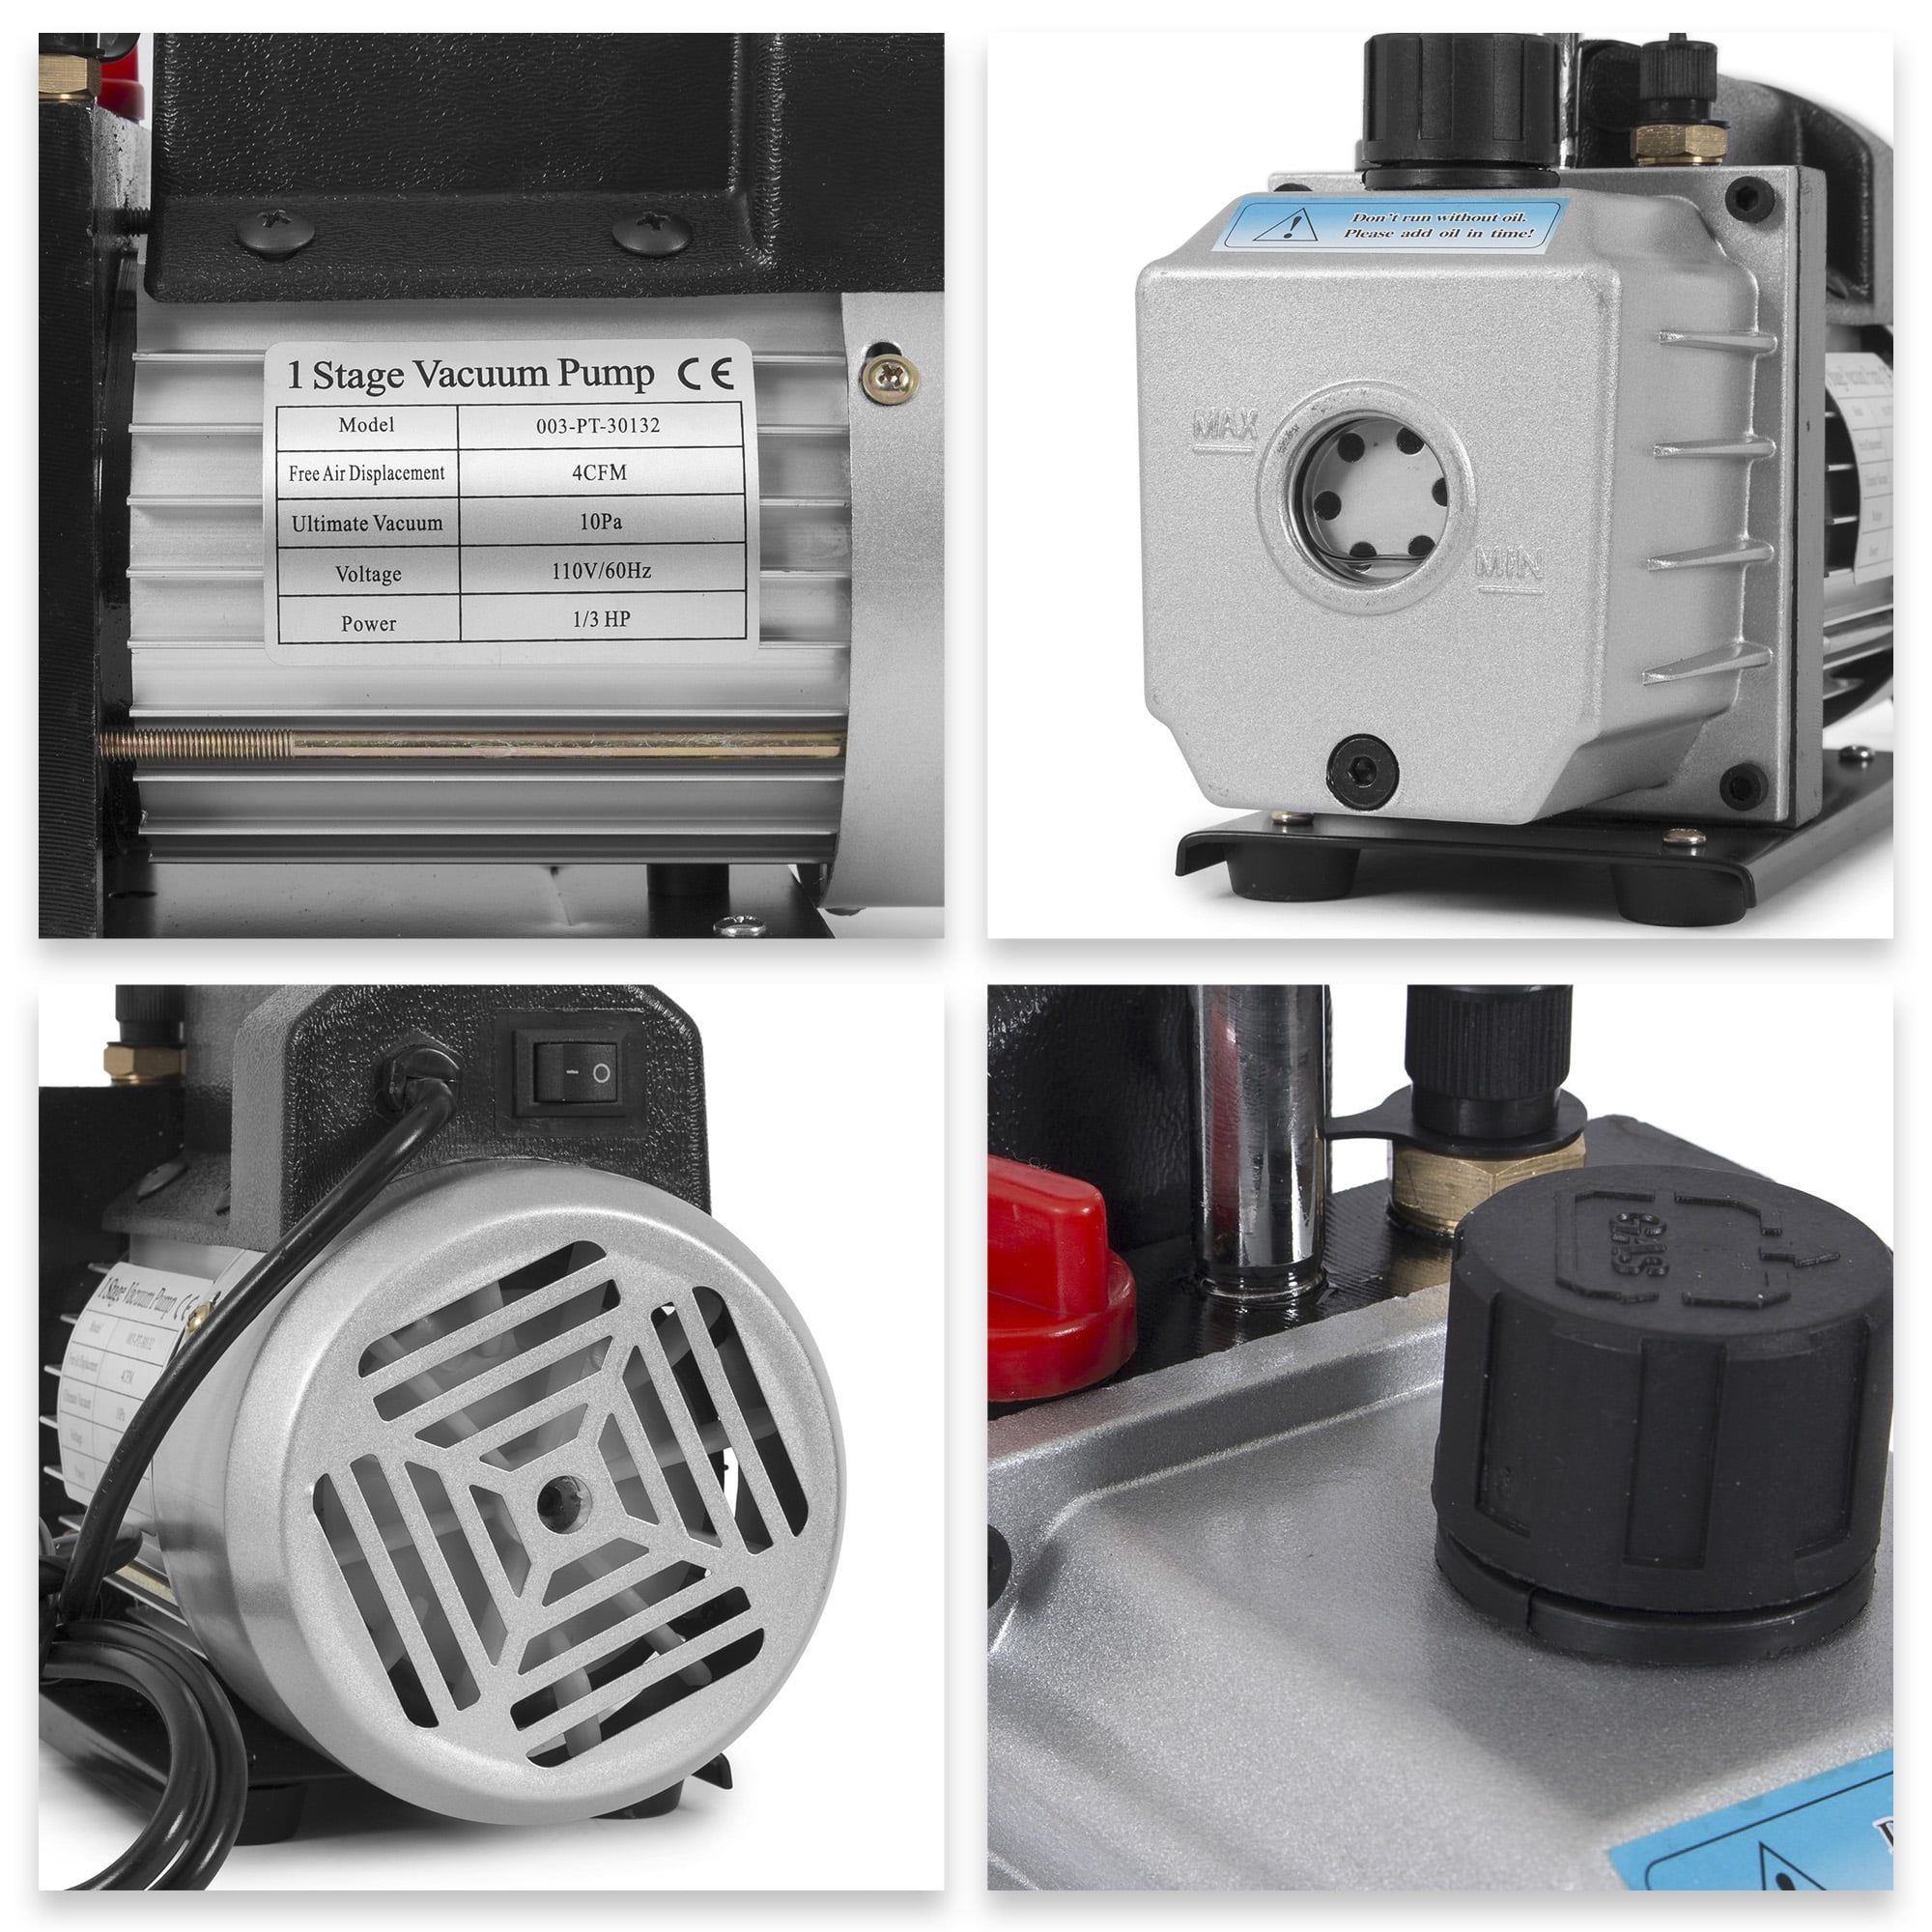 Vacuum marinator 220V vacuum pump, 3550041-1. AyrKing LLC